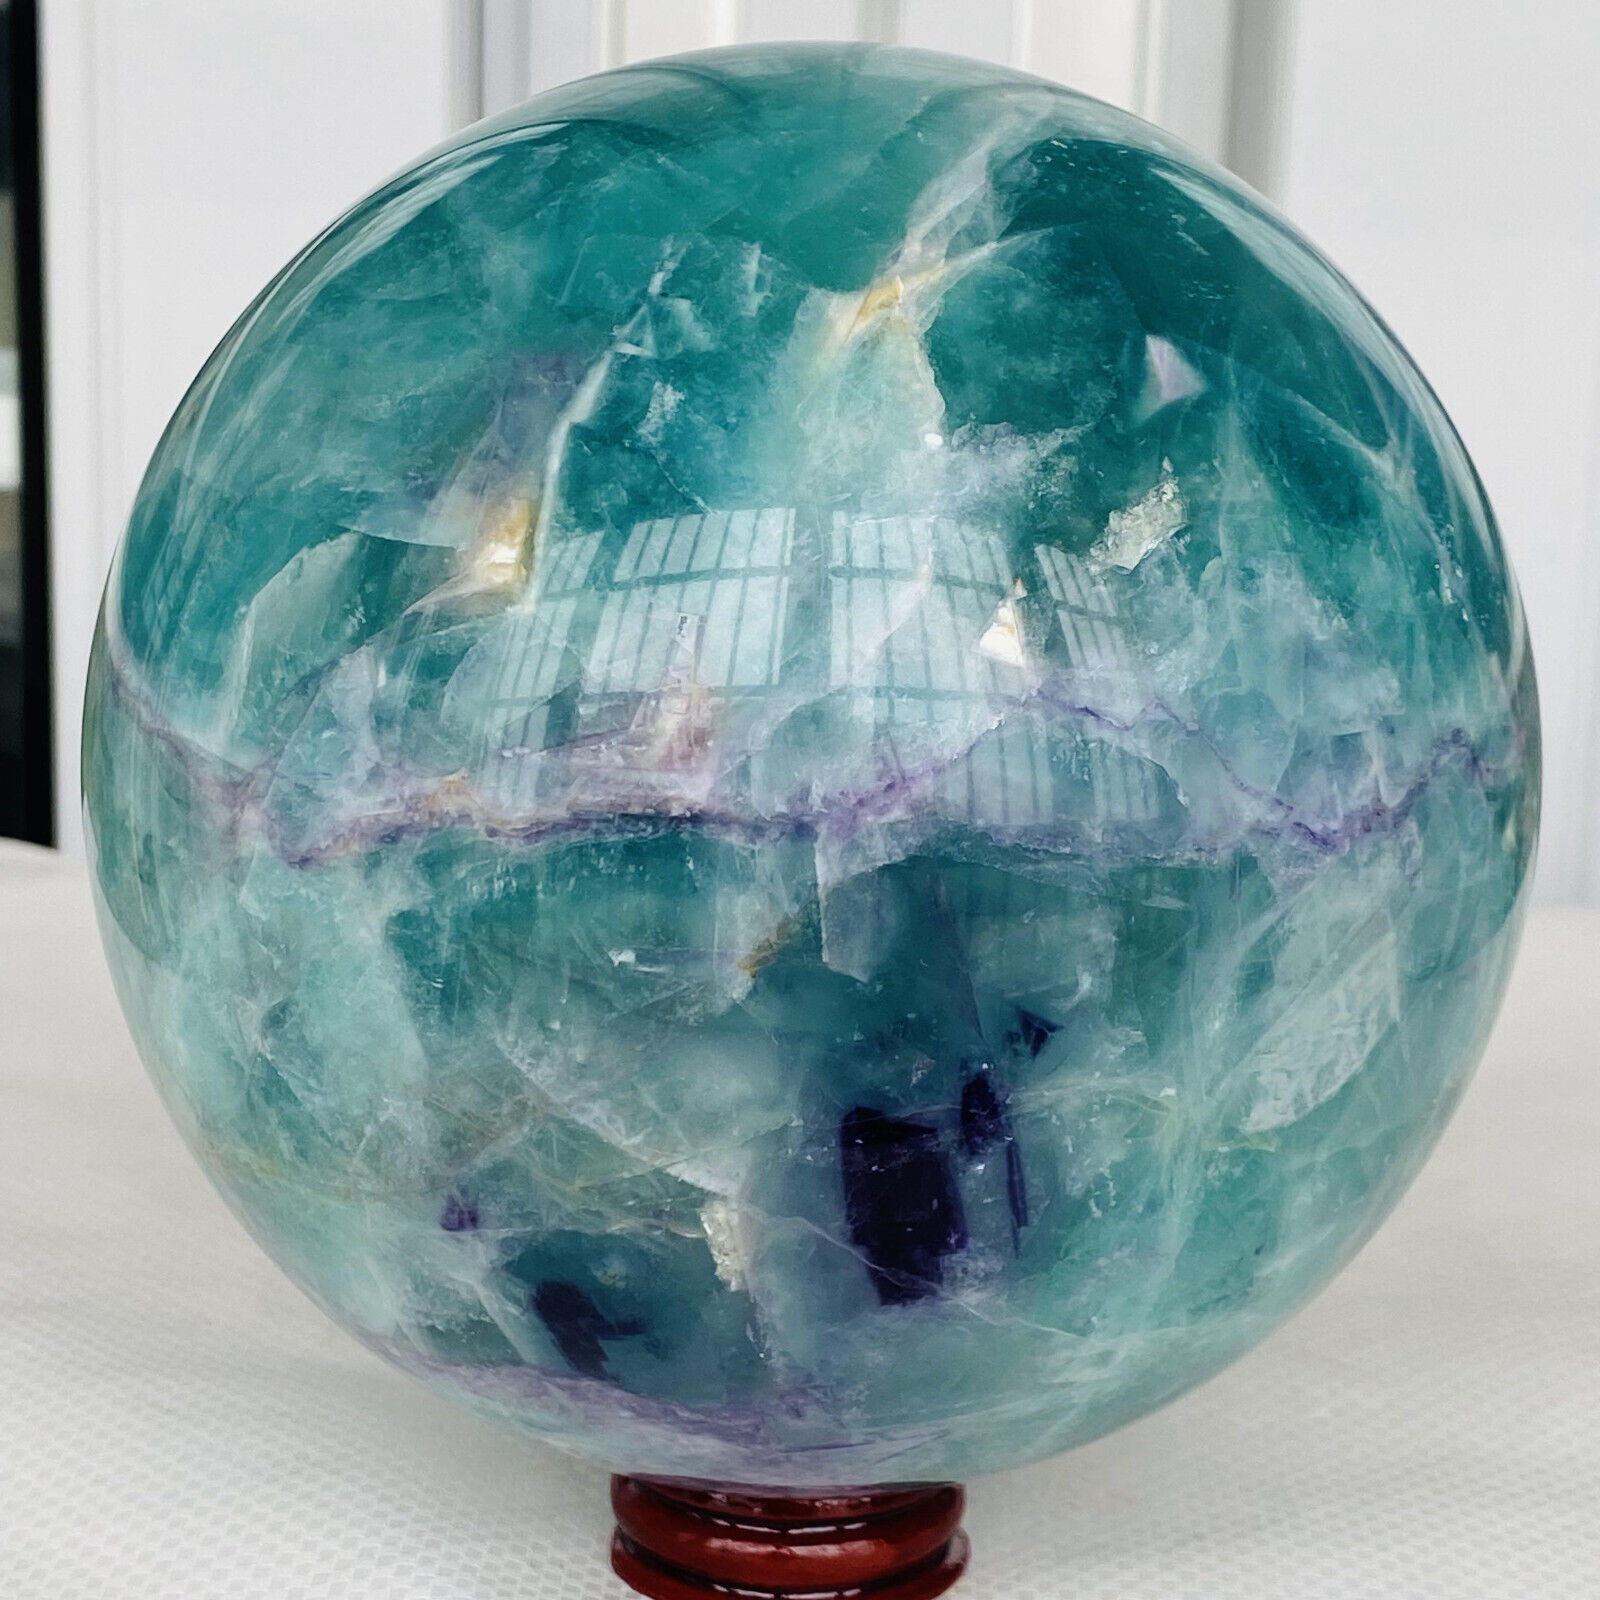 3780g Natural Fluorite ball Colorful Quartz Crystal Gemstone Healing